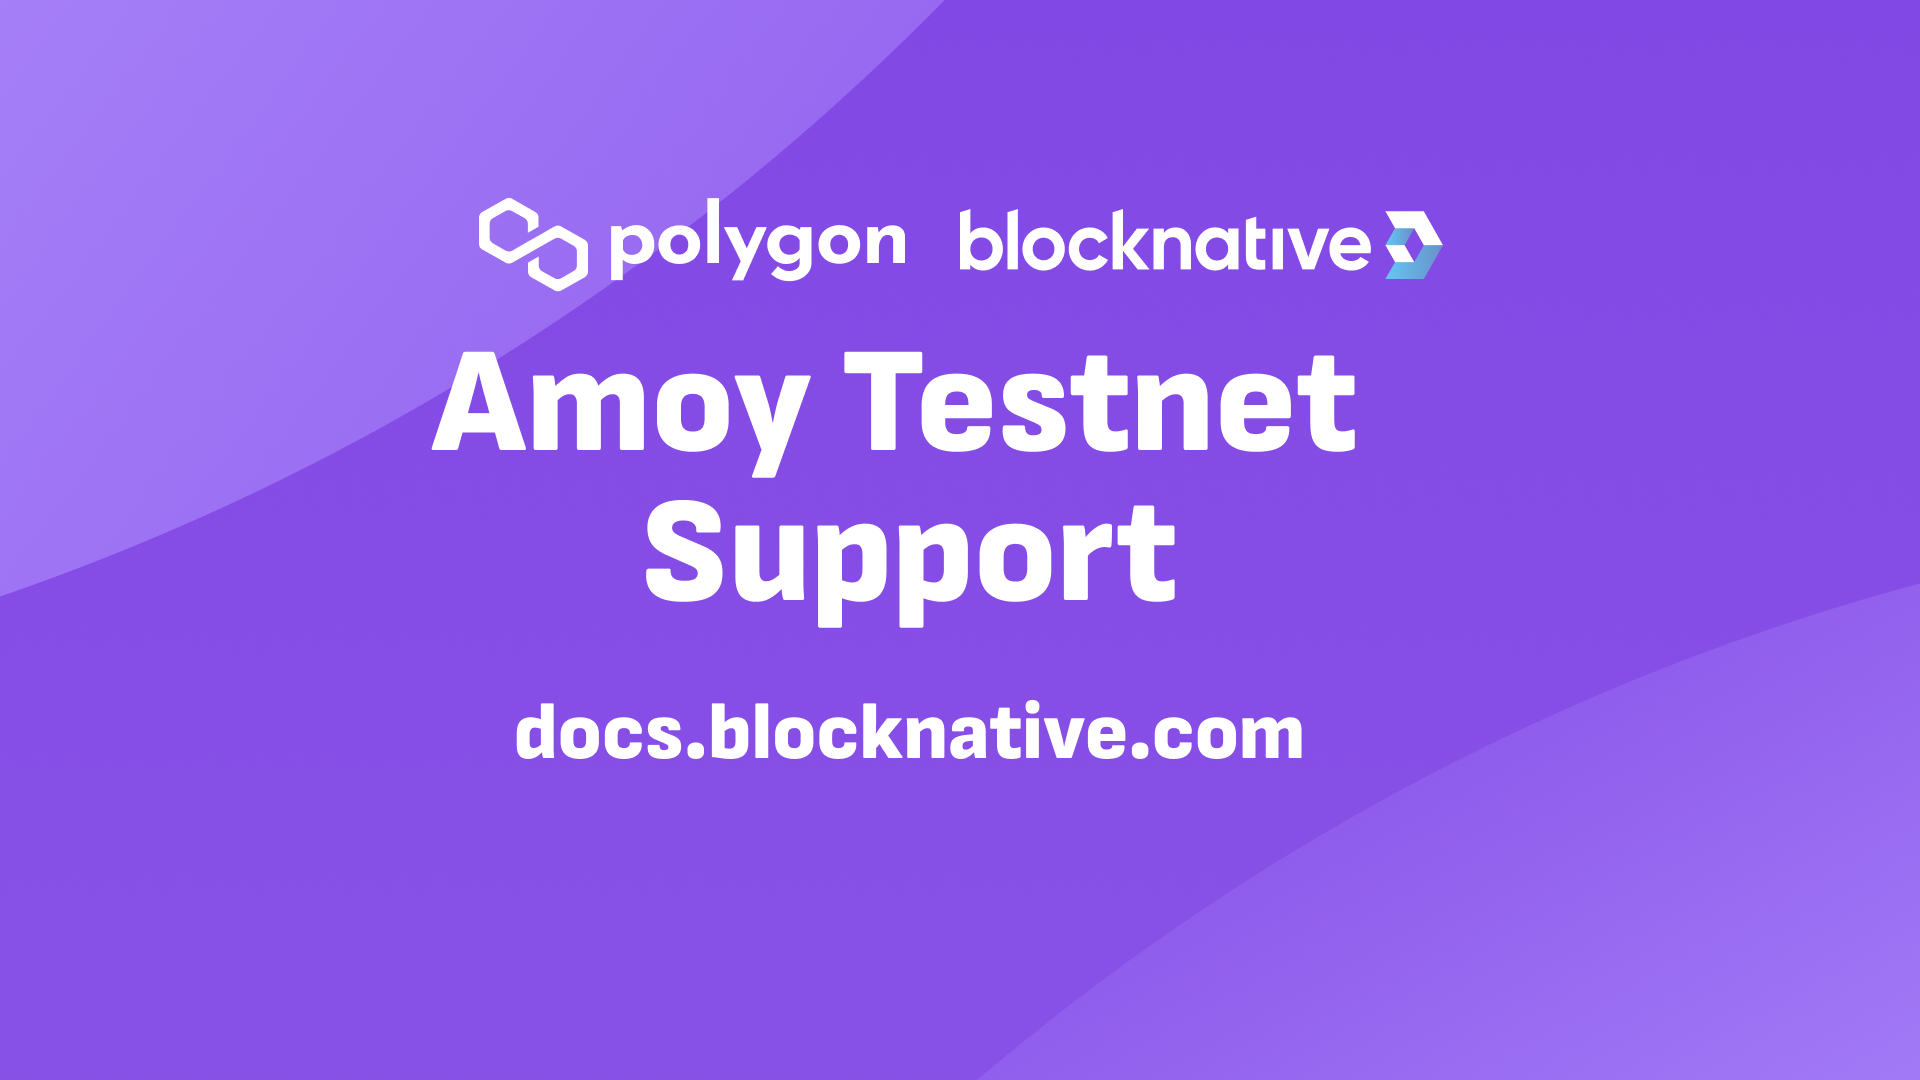 blocknative-supports-the-polygon-amoy-testnet